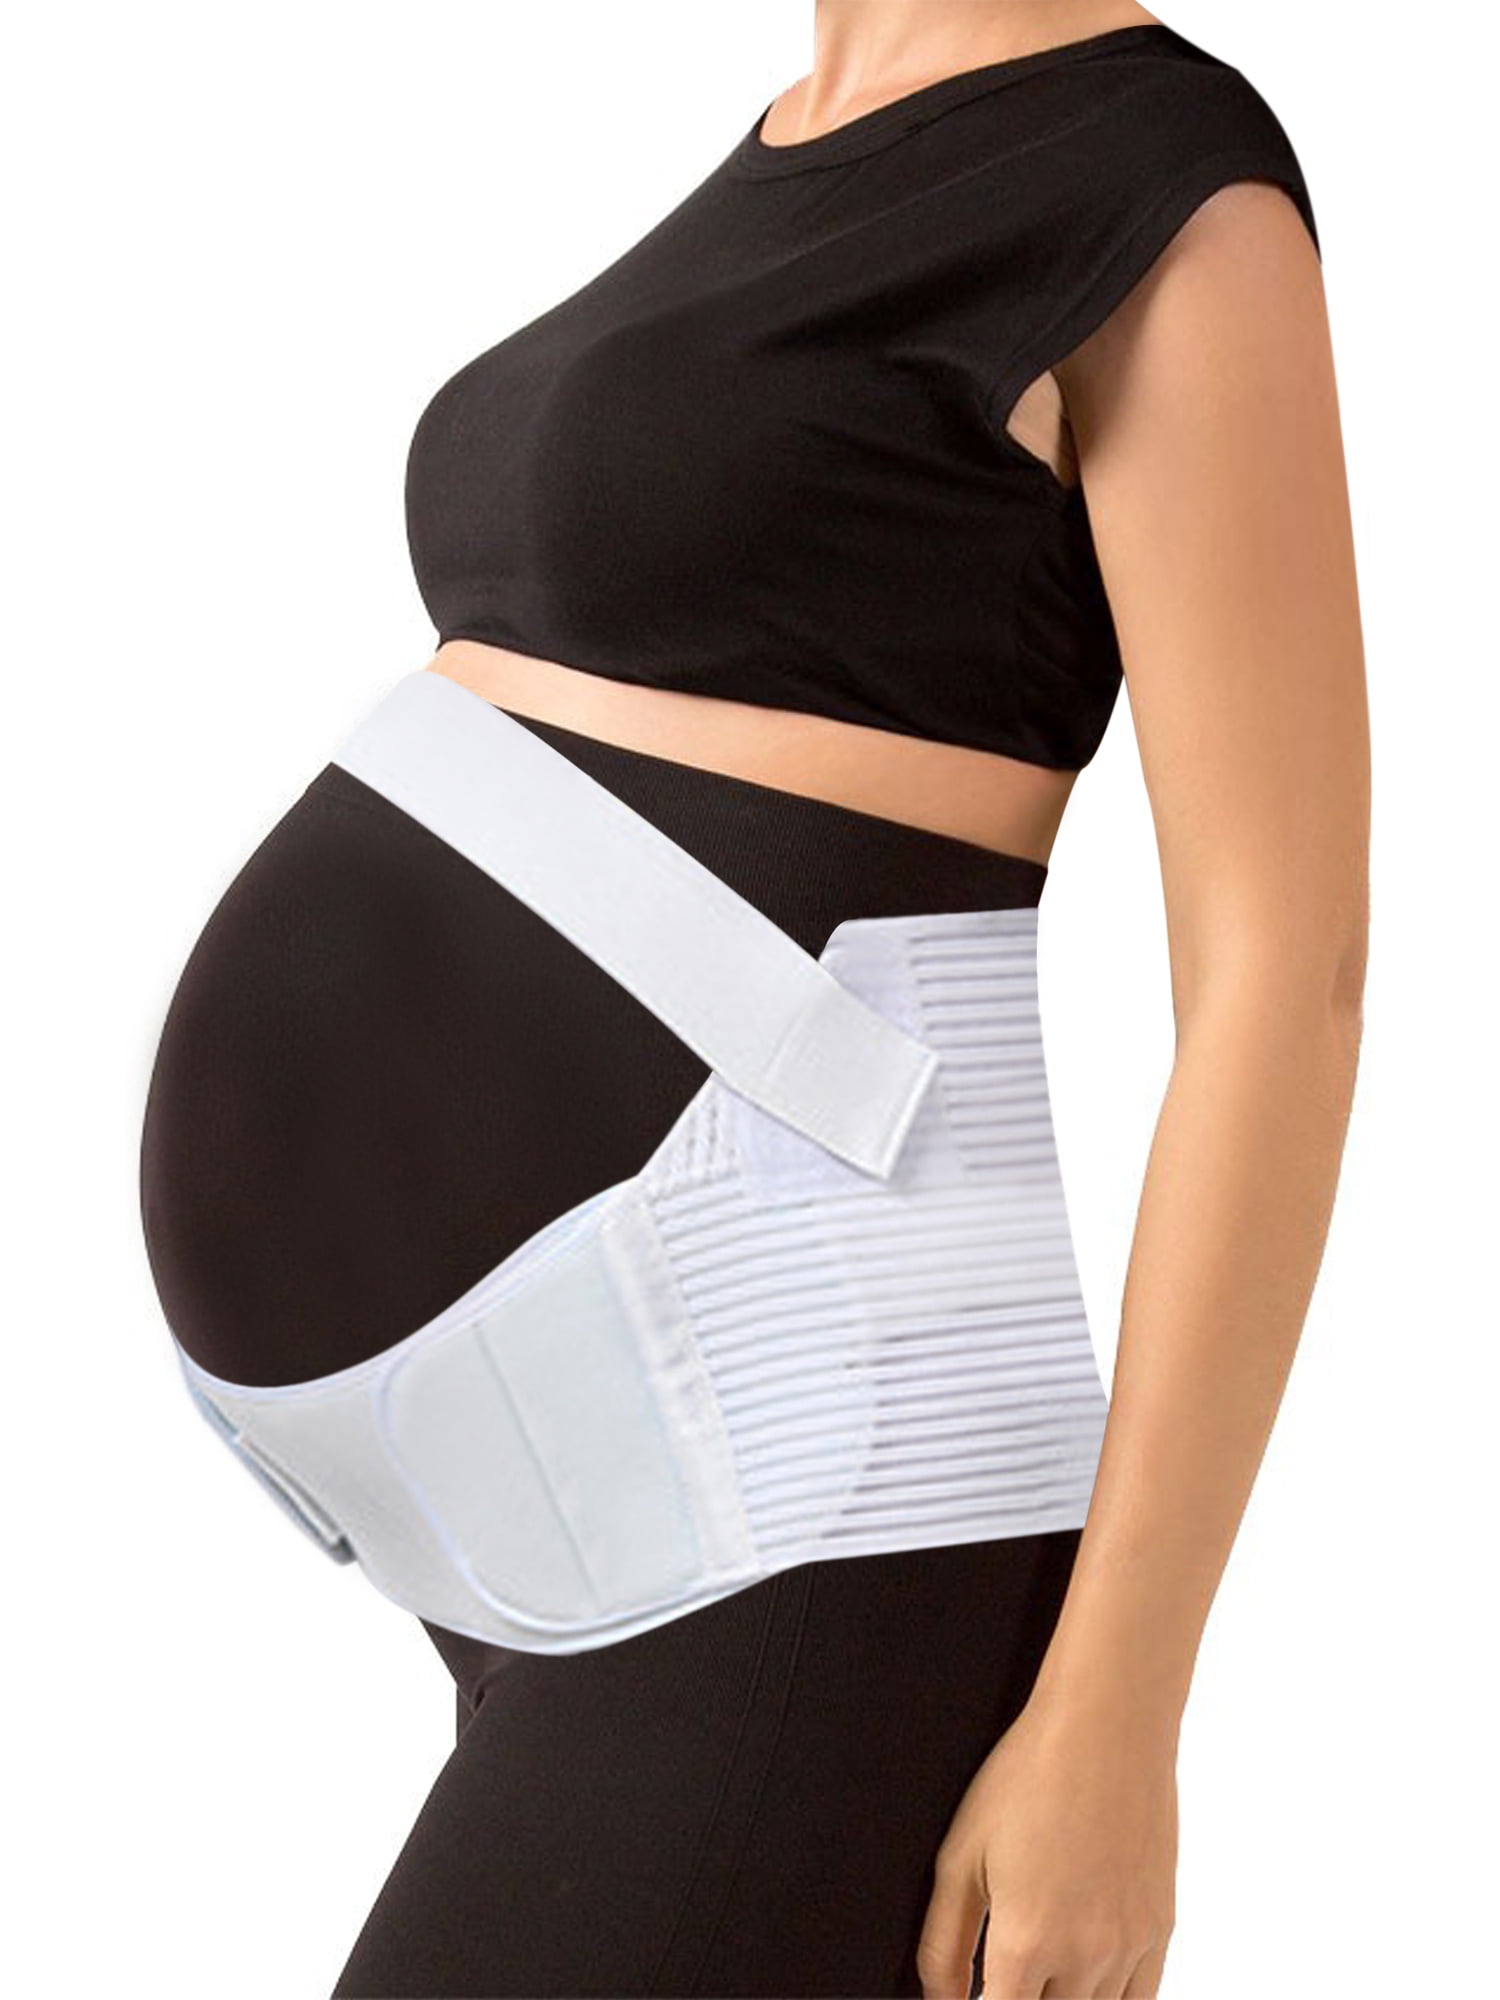 Hisret Maternity Belly Support Belts Pregnancy Waist Back Abdomen Band Fully Adjustable